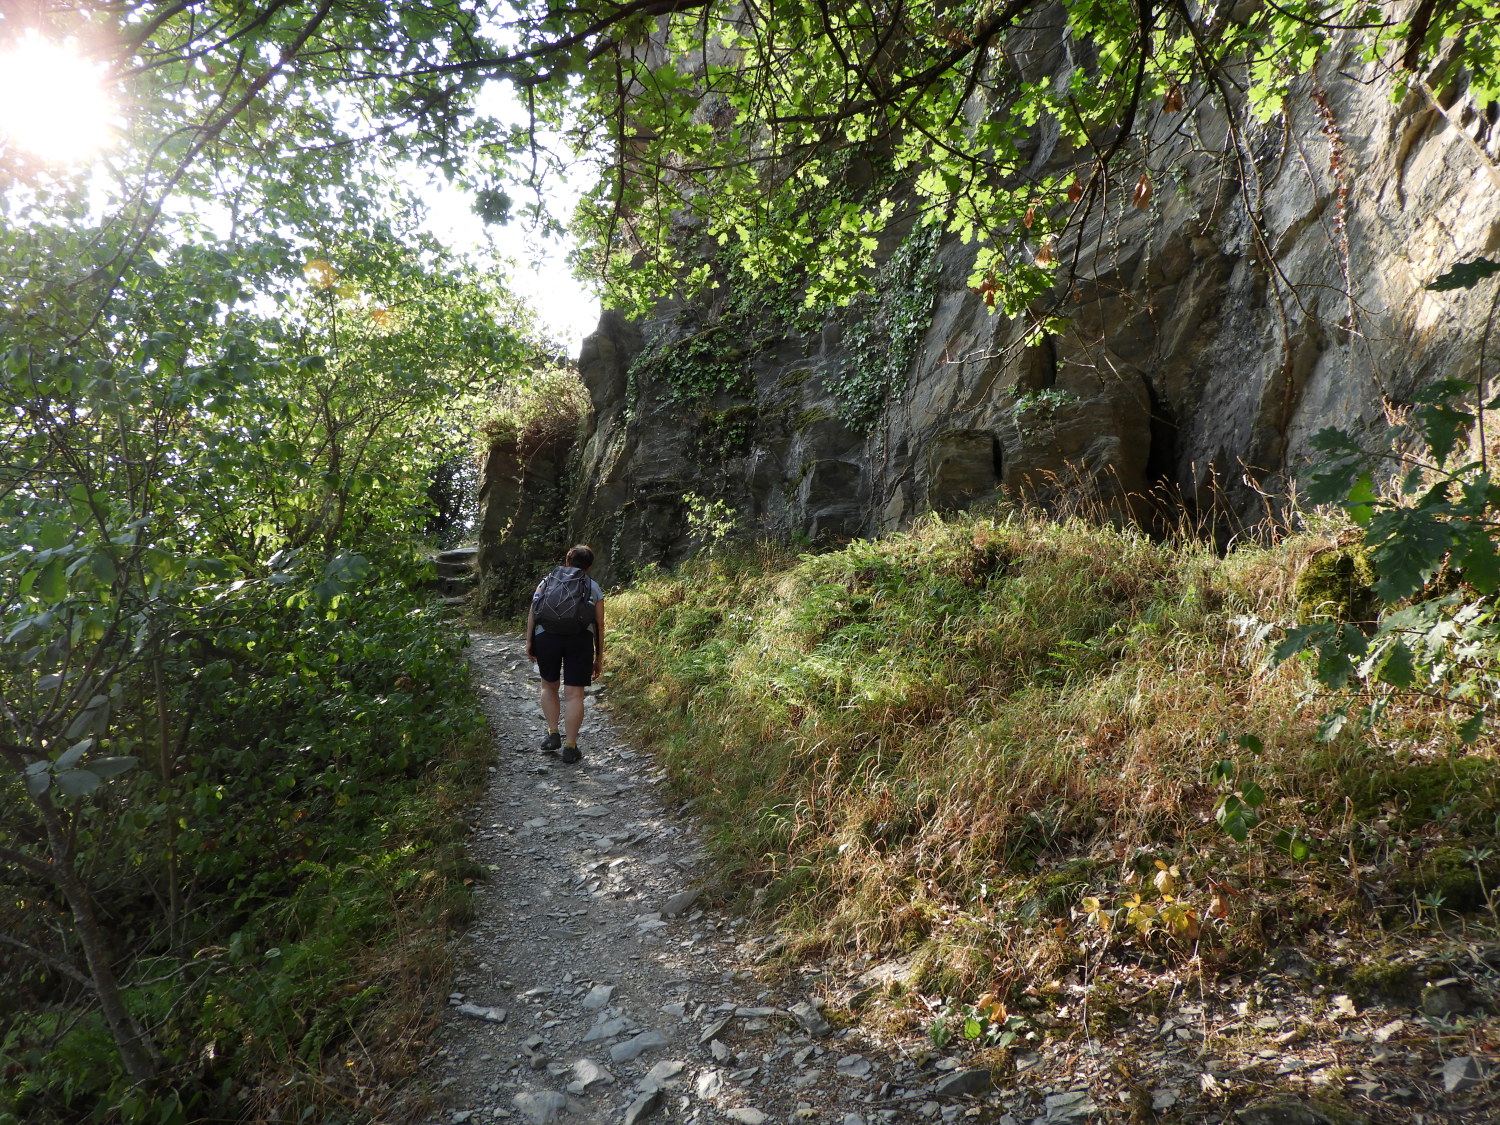 The climb to Burg Schoenburg